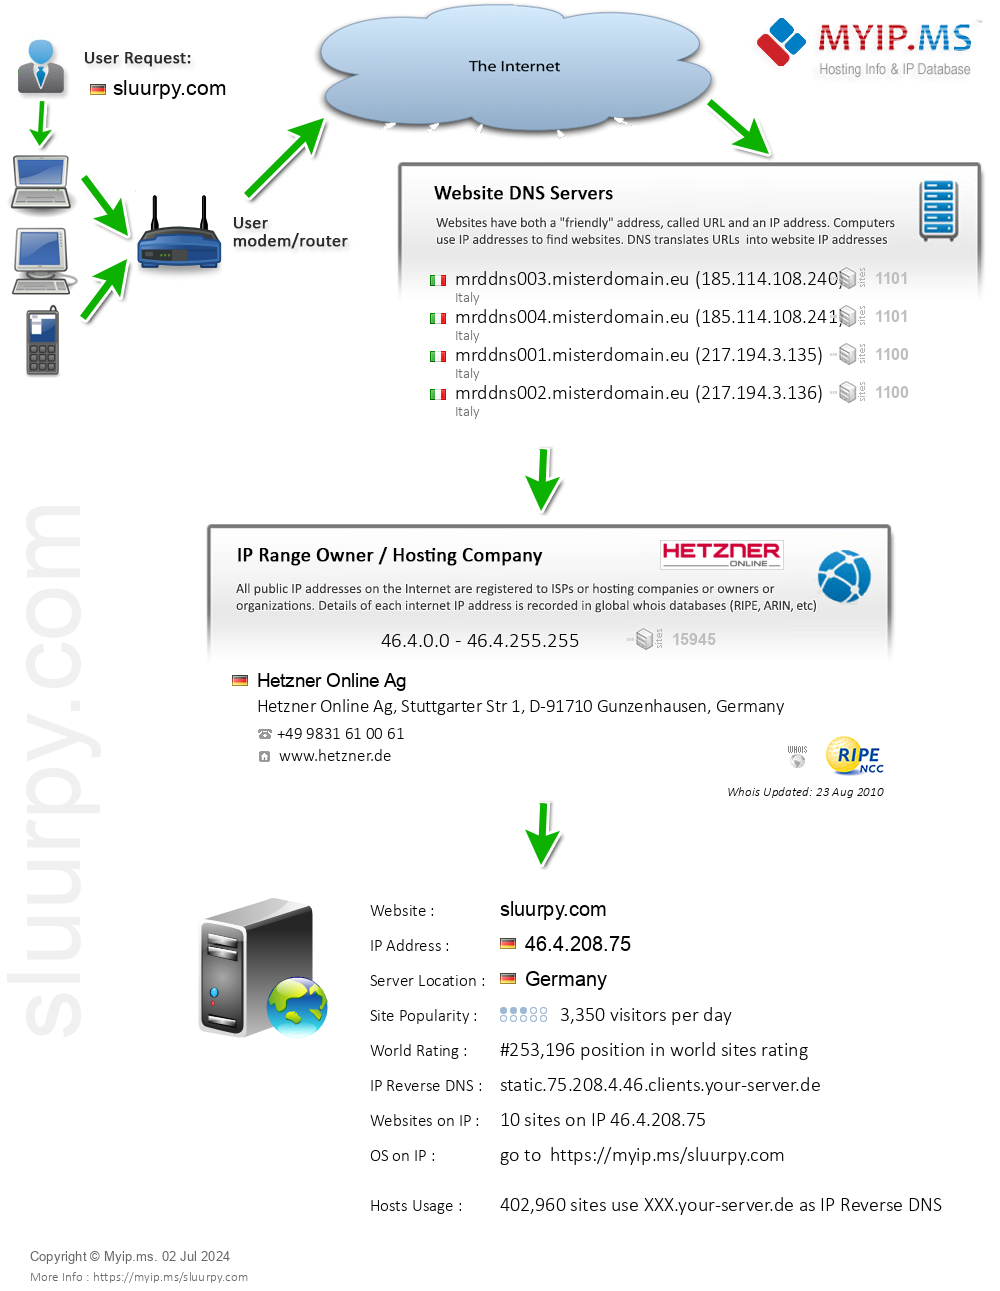 Sluurpy.com - Website Hosting Visual IP Diagram